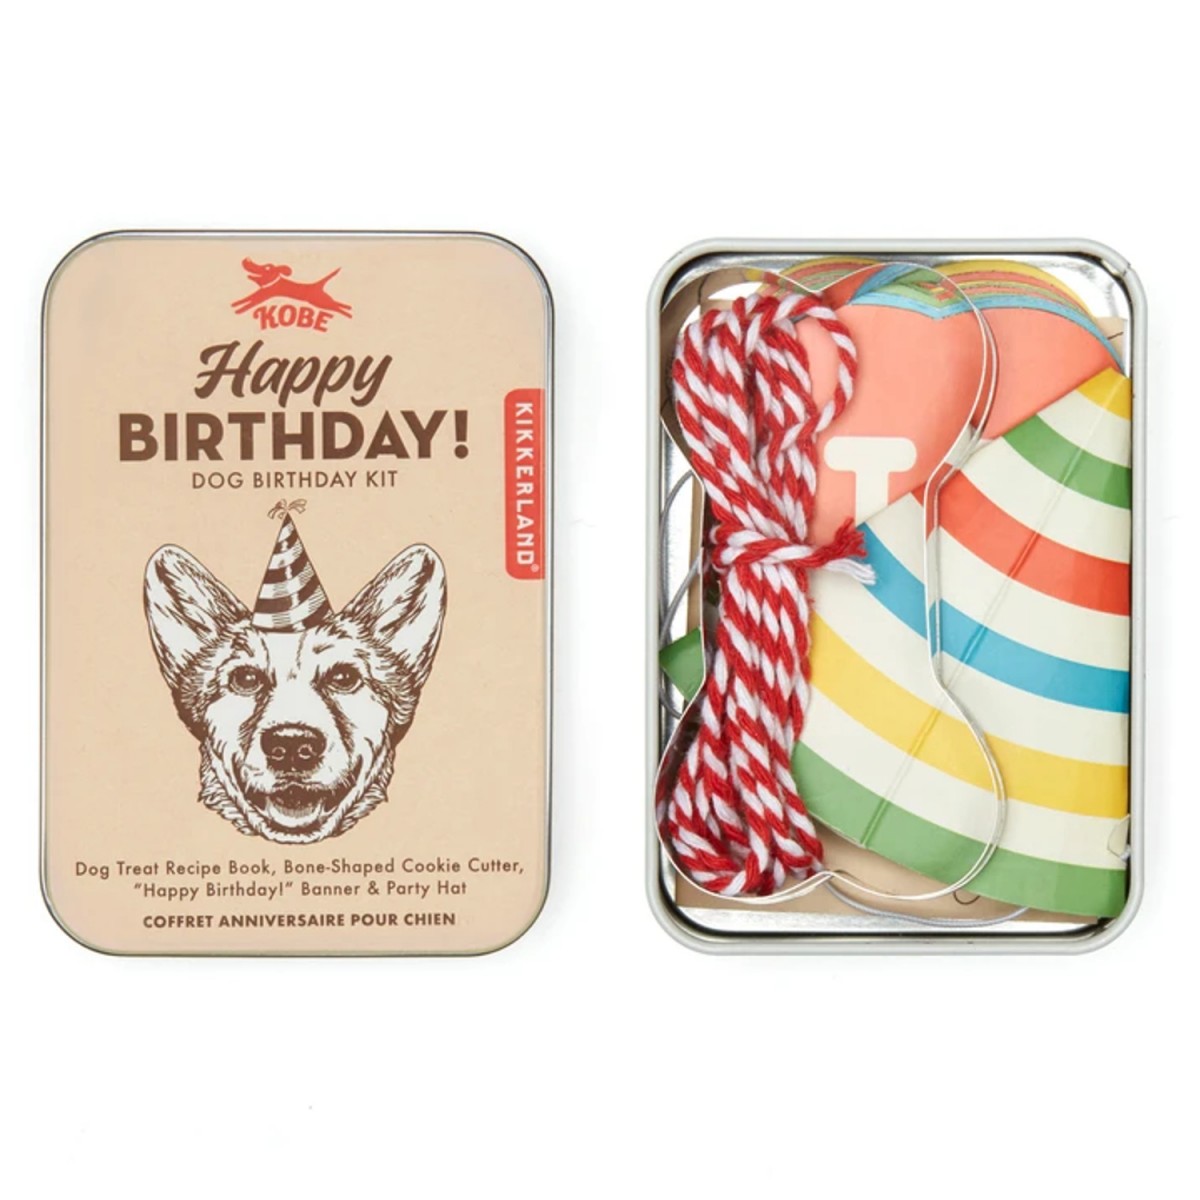 KIKKERLAND Kit compleanno cane, happy birthday dog kit